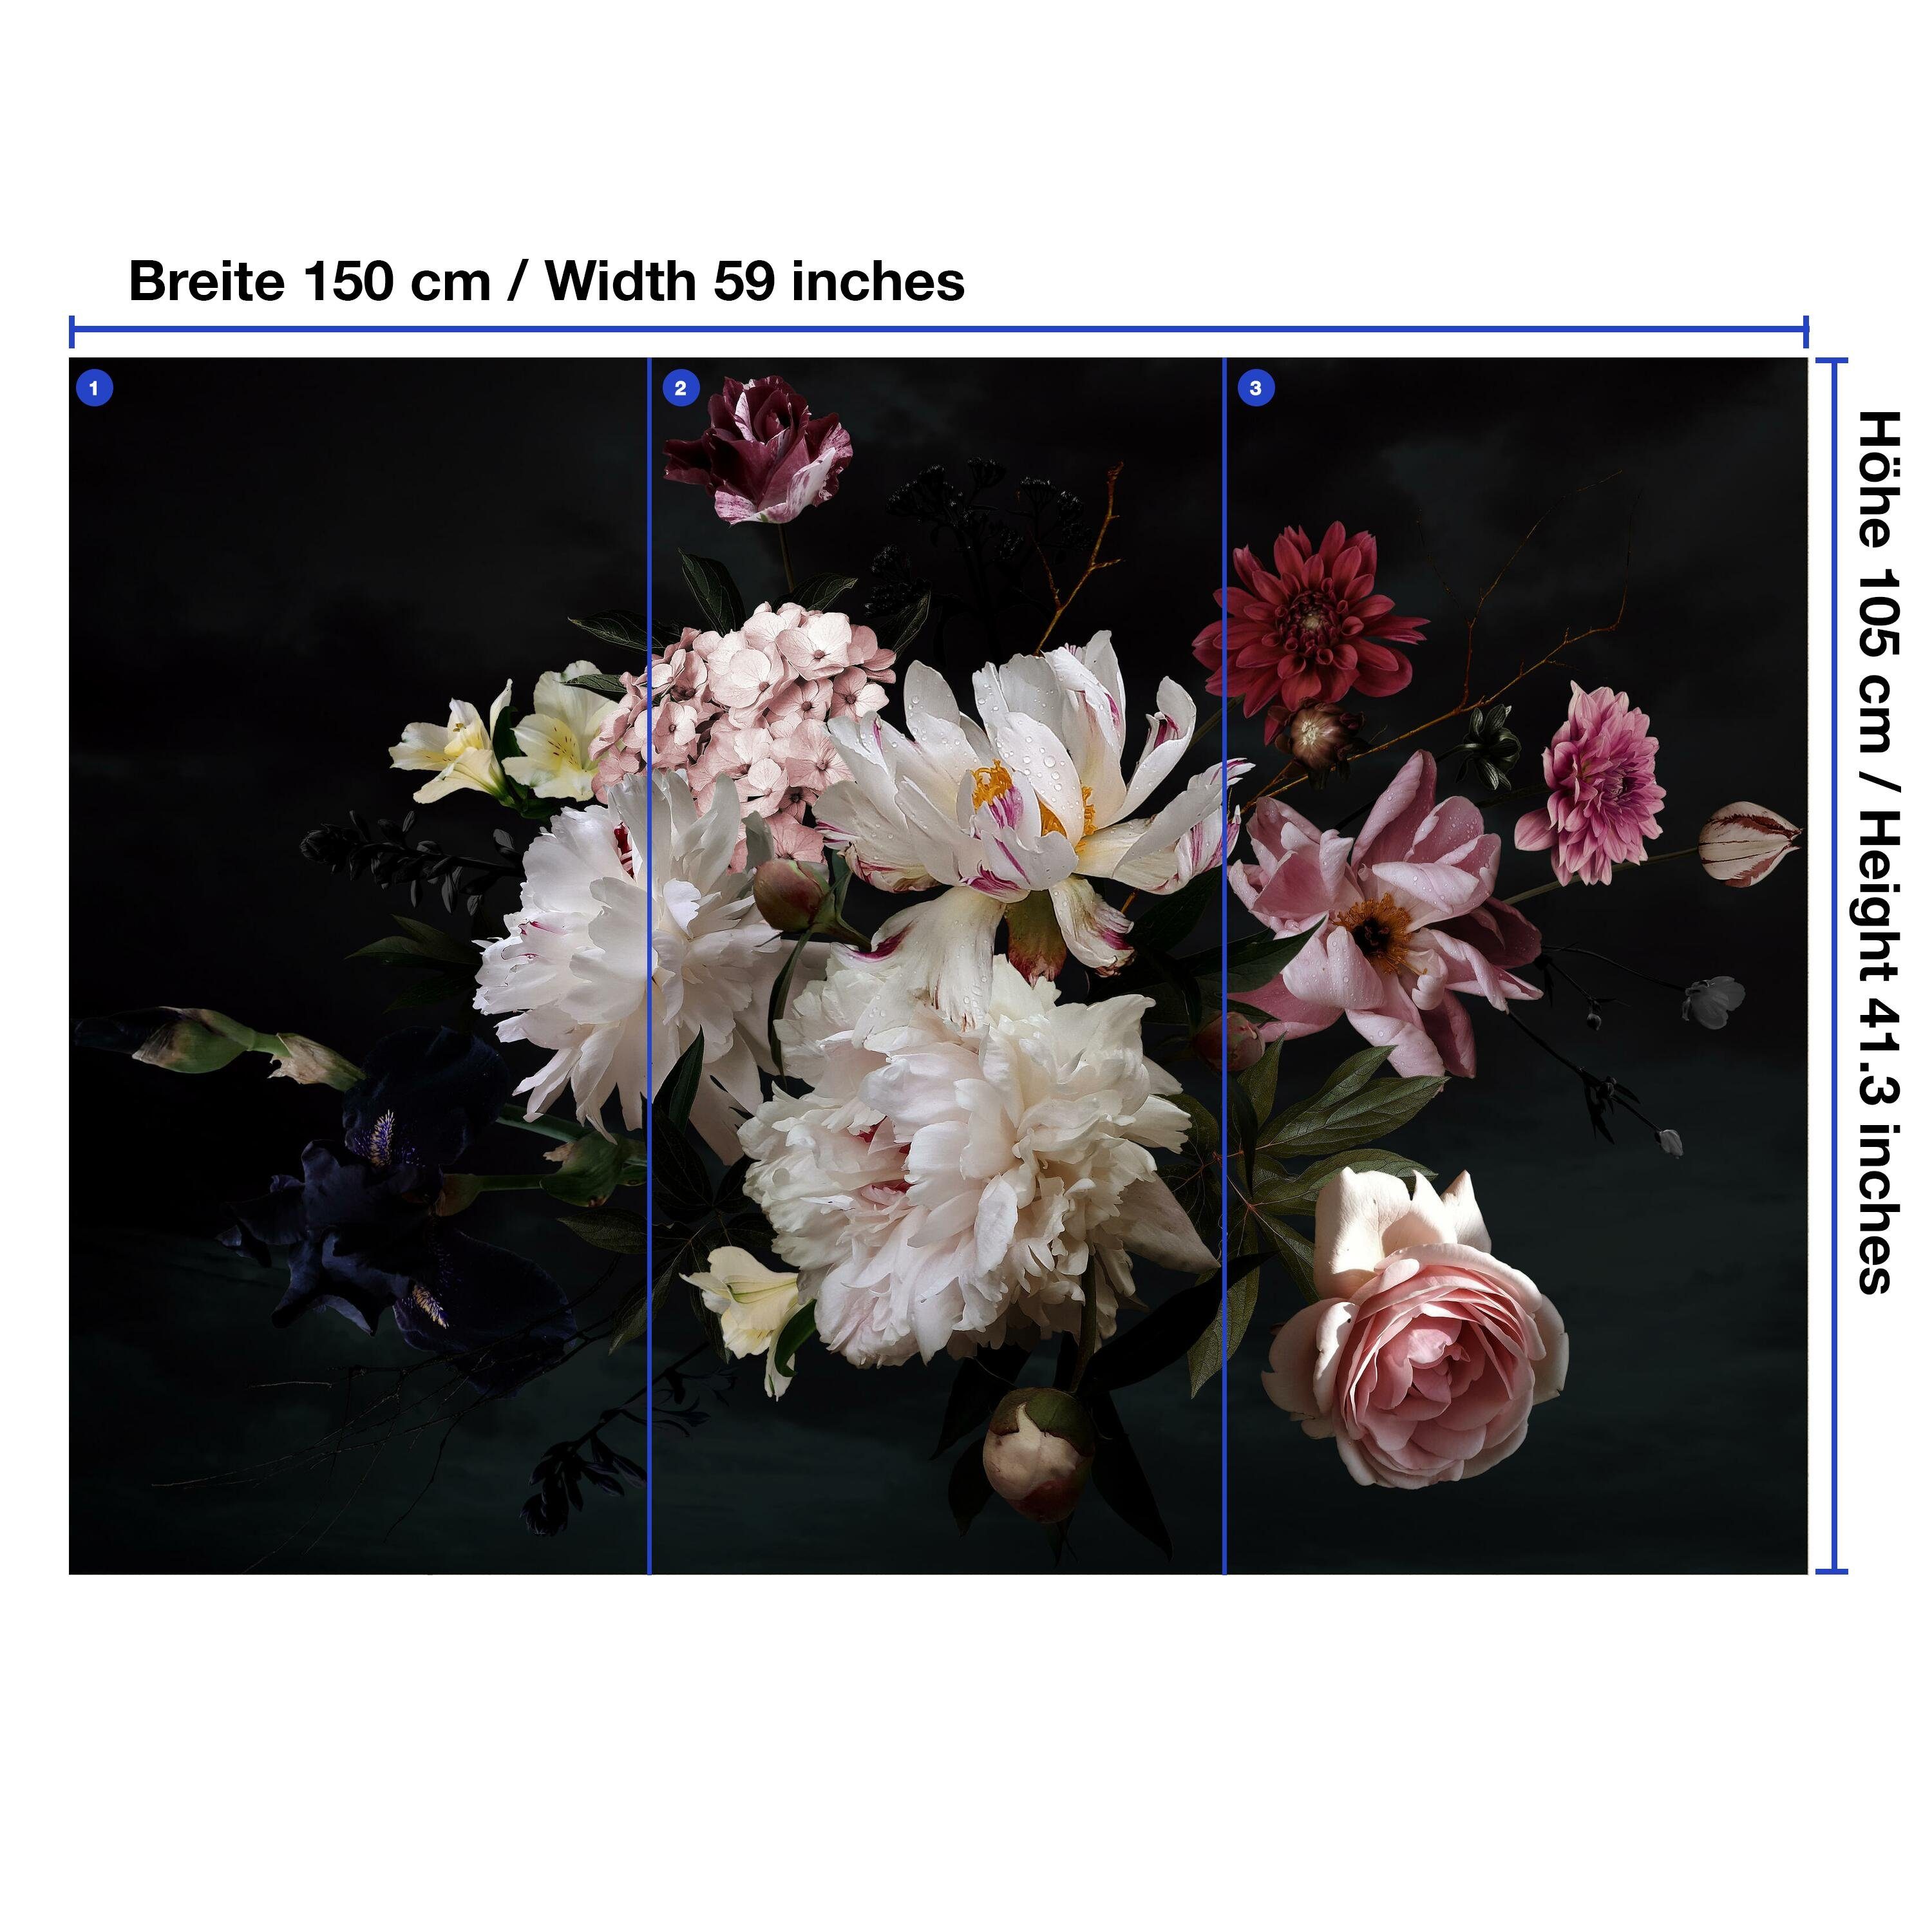 Vliestapete wandmotiv24 Wandtapete, Motivtapete, Fototapete matt, Pflanzen, glatt, Blüten Rosa